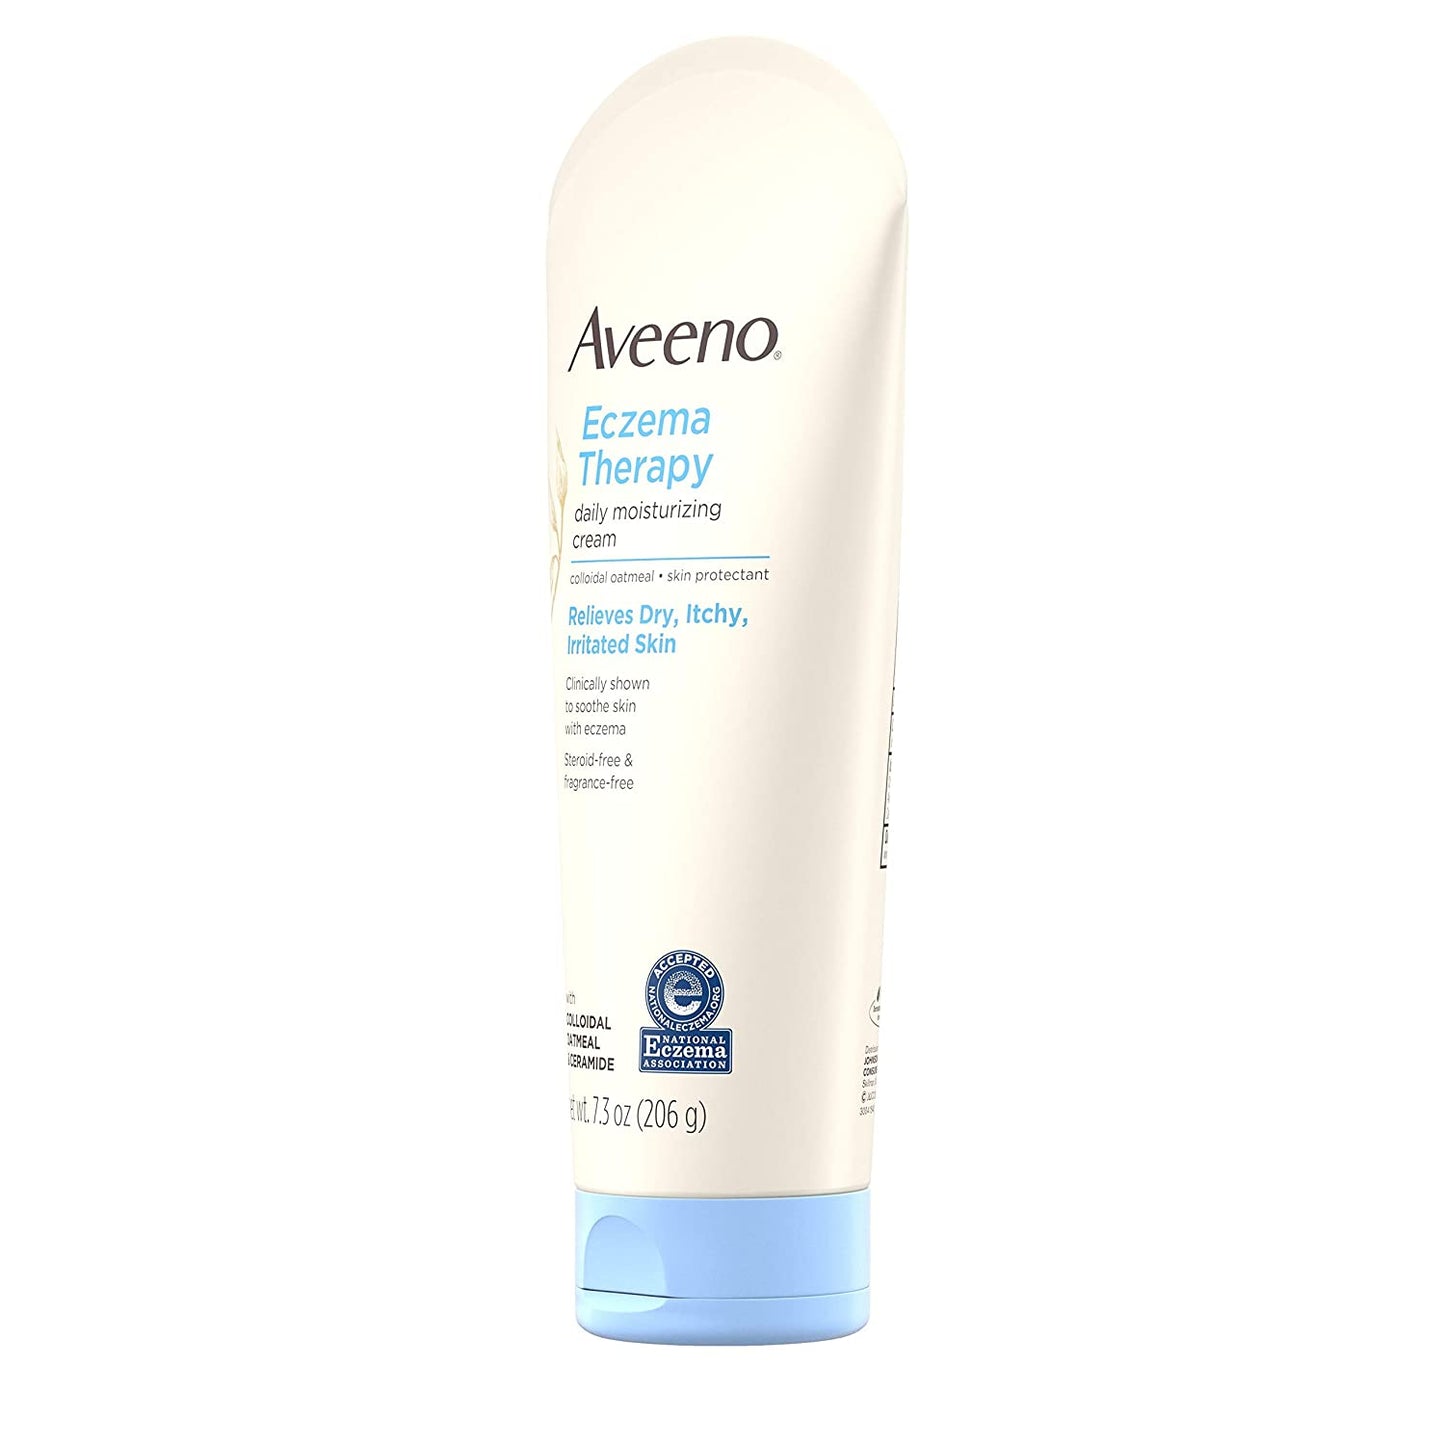 Aveeno Active Naturals Eczema Therapy Moisturizing Cream, 7.3 oz